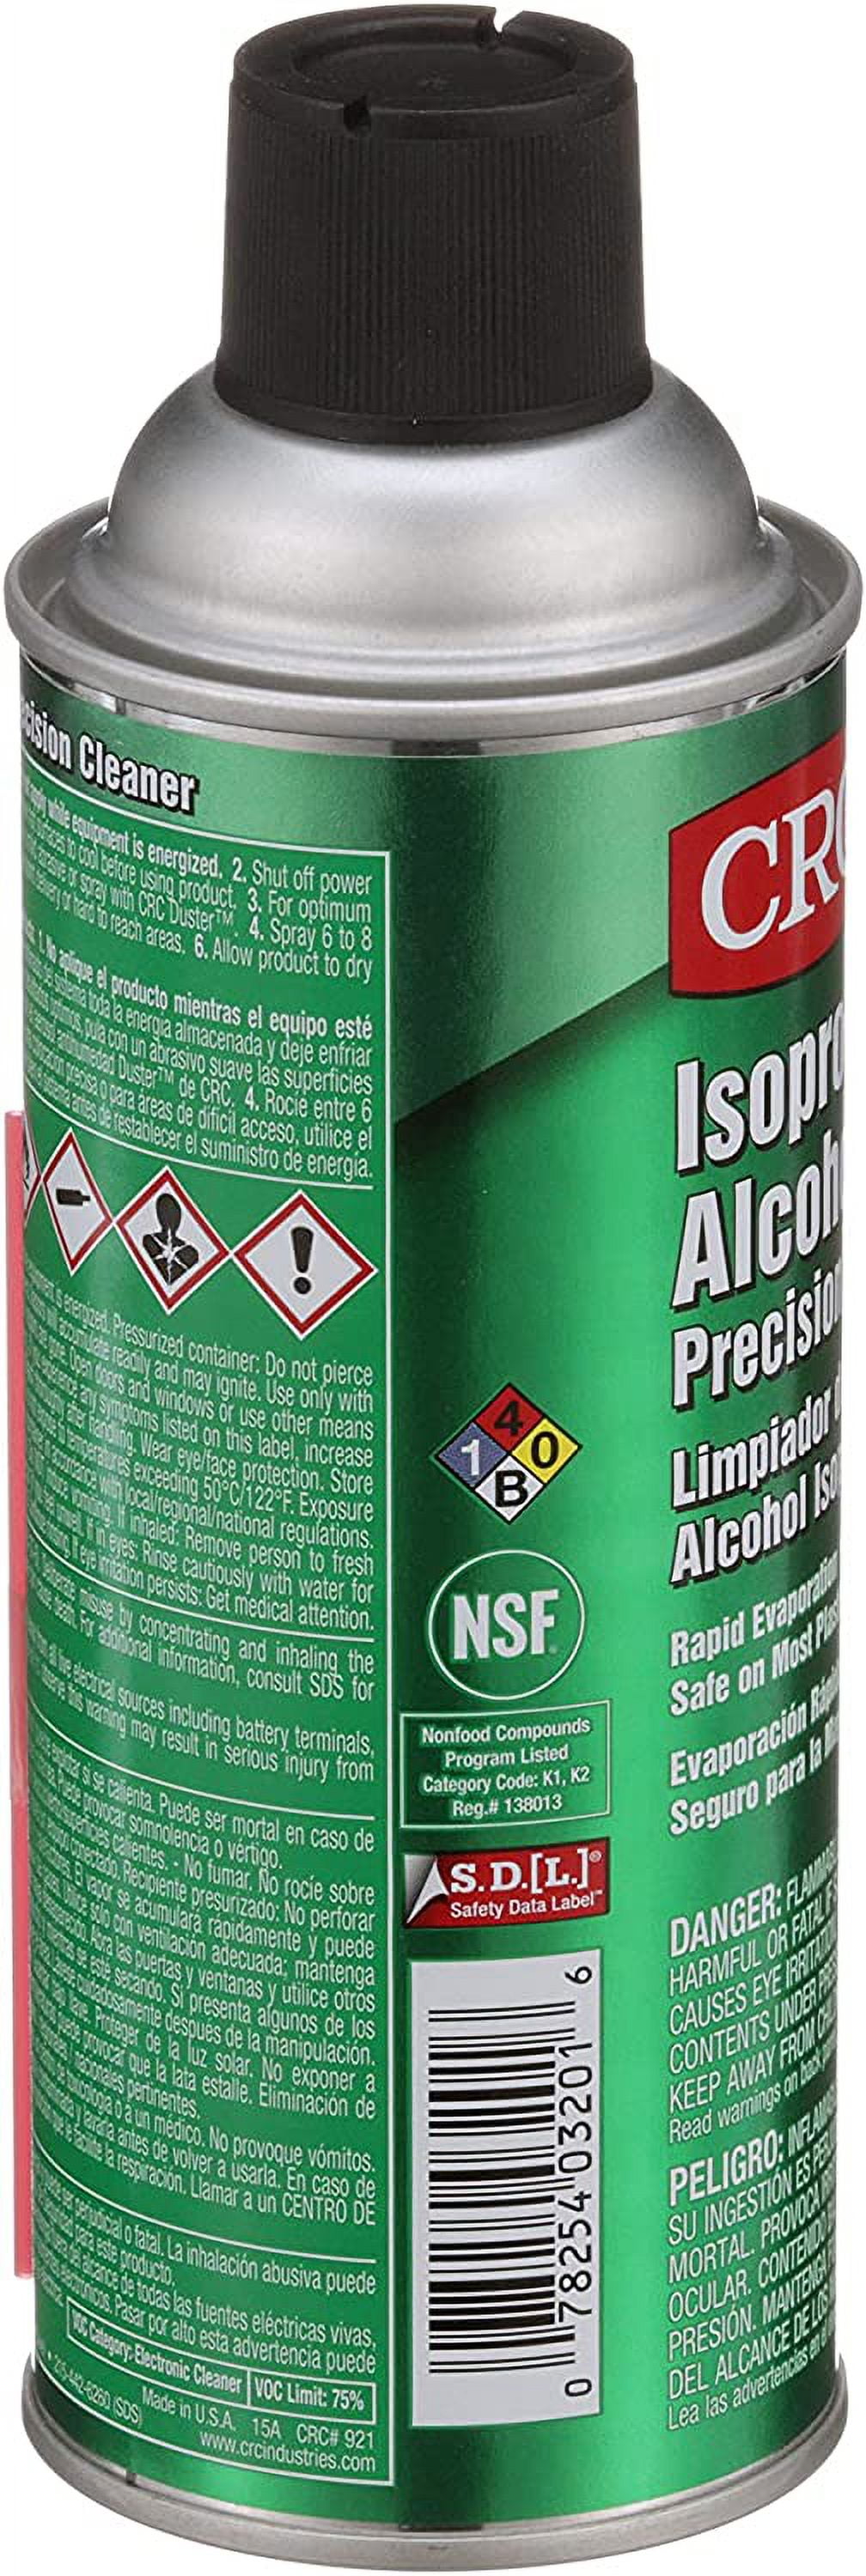 Alcohol isopropilico aerosol de 440ml / lim.08 – Joinet